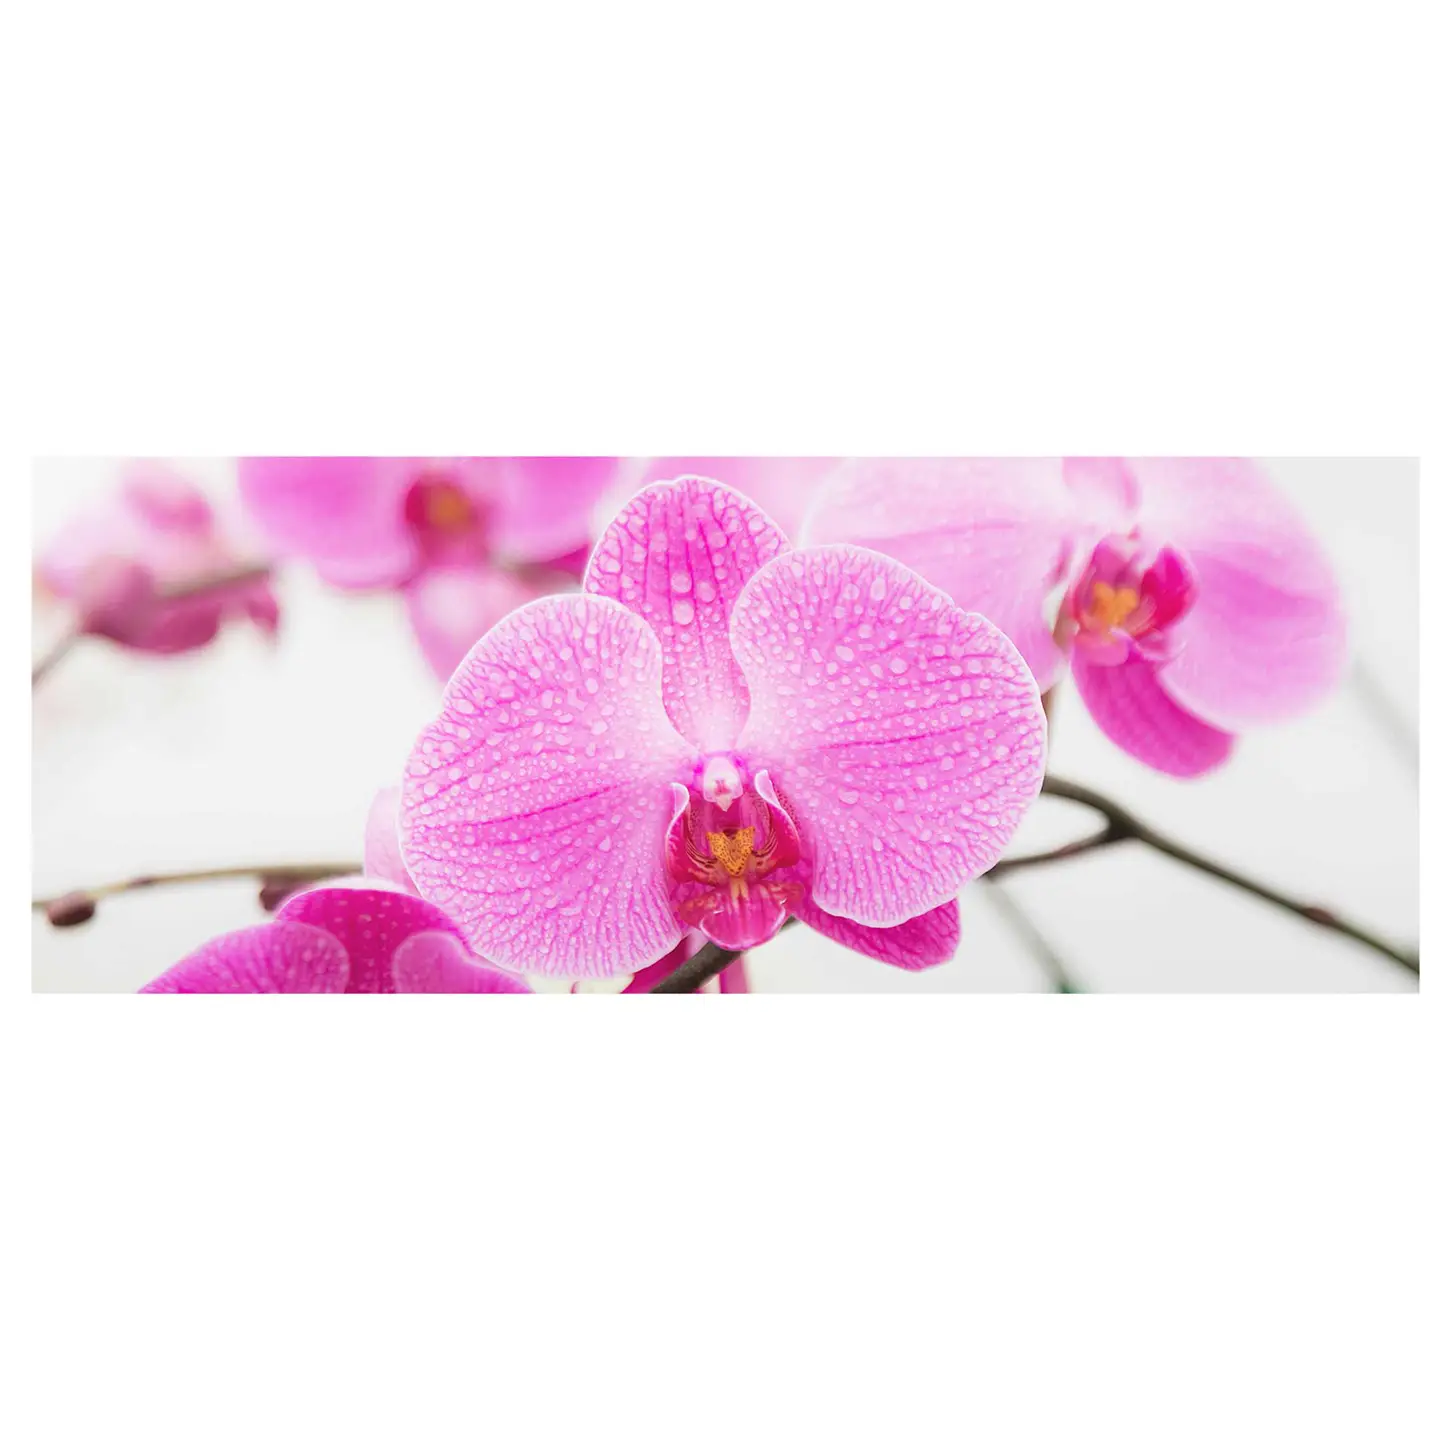 Bild Orchidee Nahaufnahme